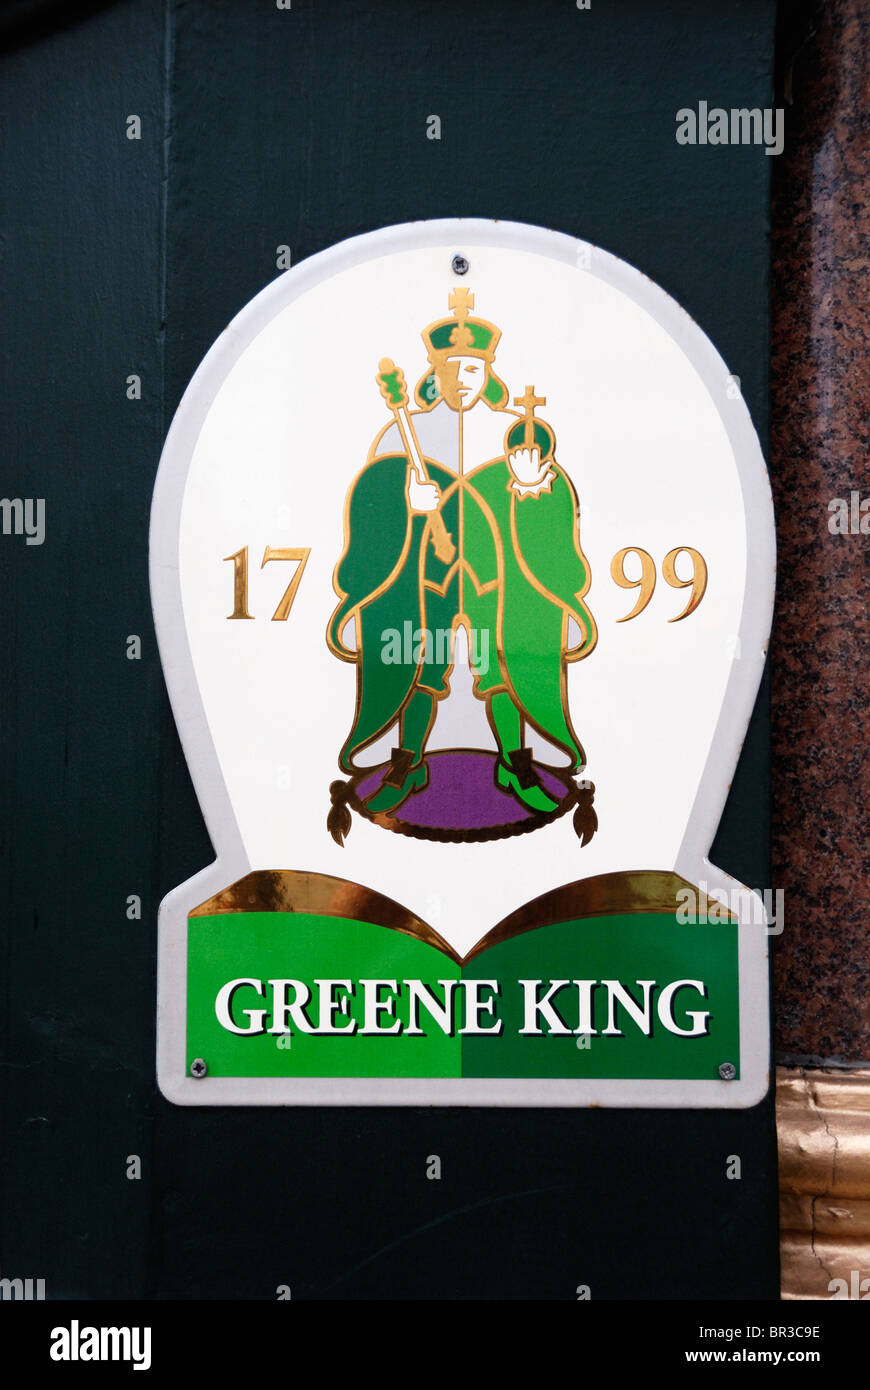 Greene King pub retailer and brewer logo outside a UK pub Stock Photo